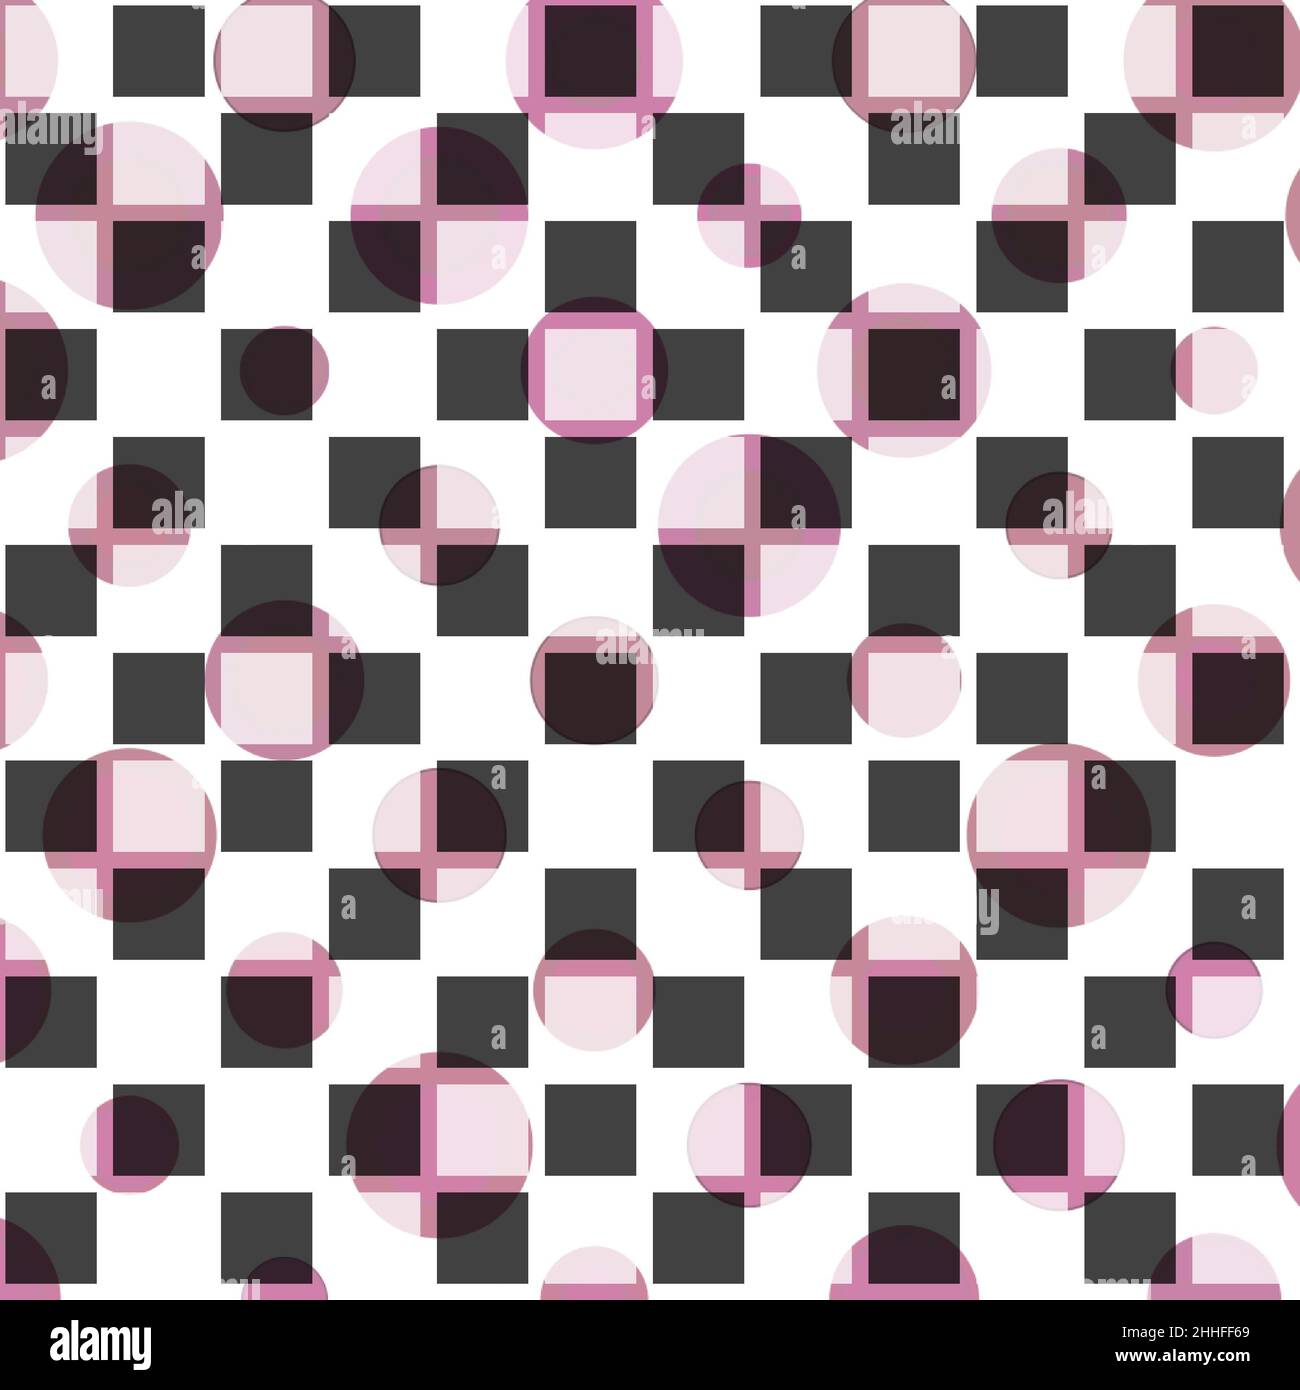 geometric colorful background pattern design Stock Photo